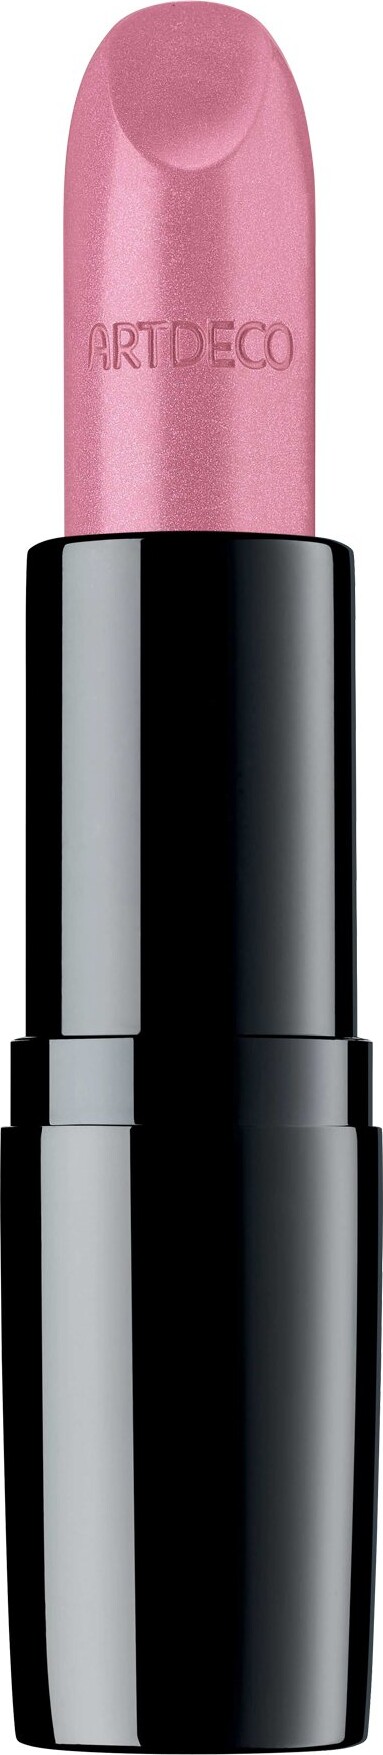 Se Artdeco - Perfect Color Lipstick - 955 Frosted Rose hos Gucca.dk